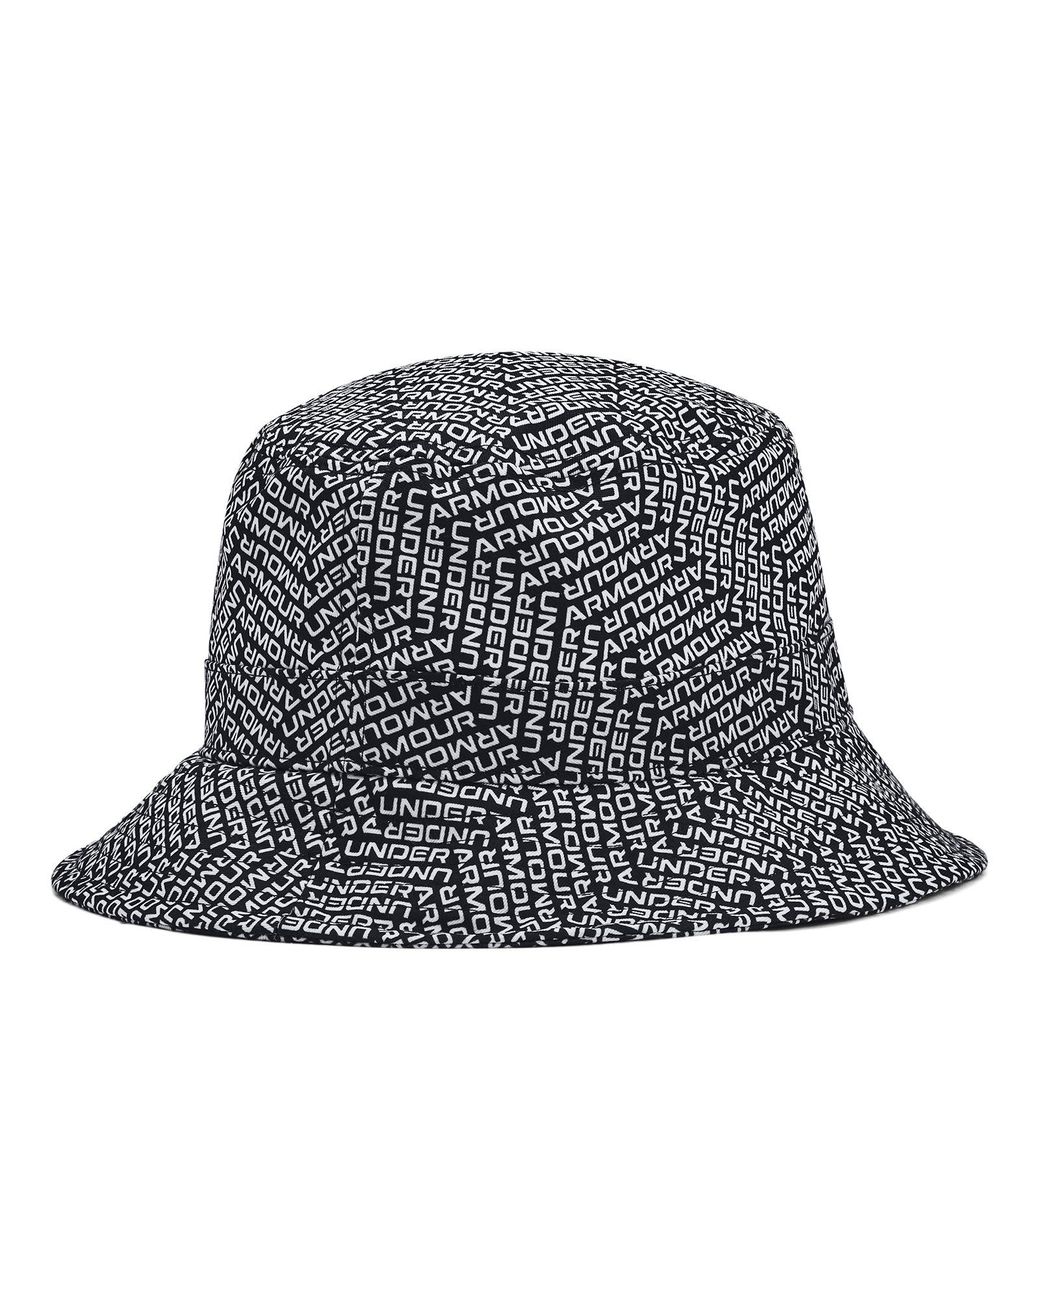 https://cdna.lystit.com/1040/1300/n/photos/underarmour/ee848583/under-armour-black-Mens-branded-bucket-hat.jpeg